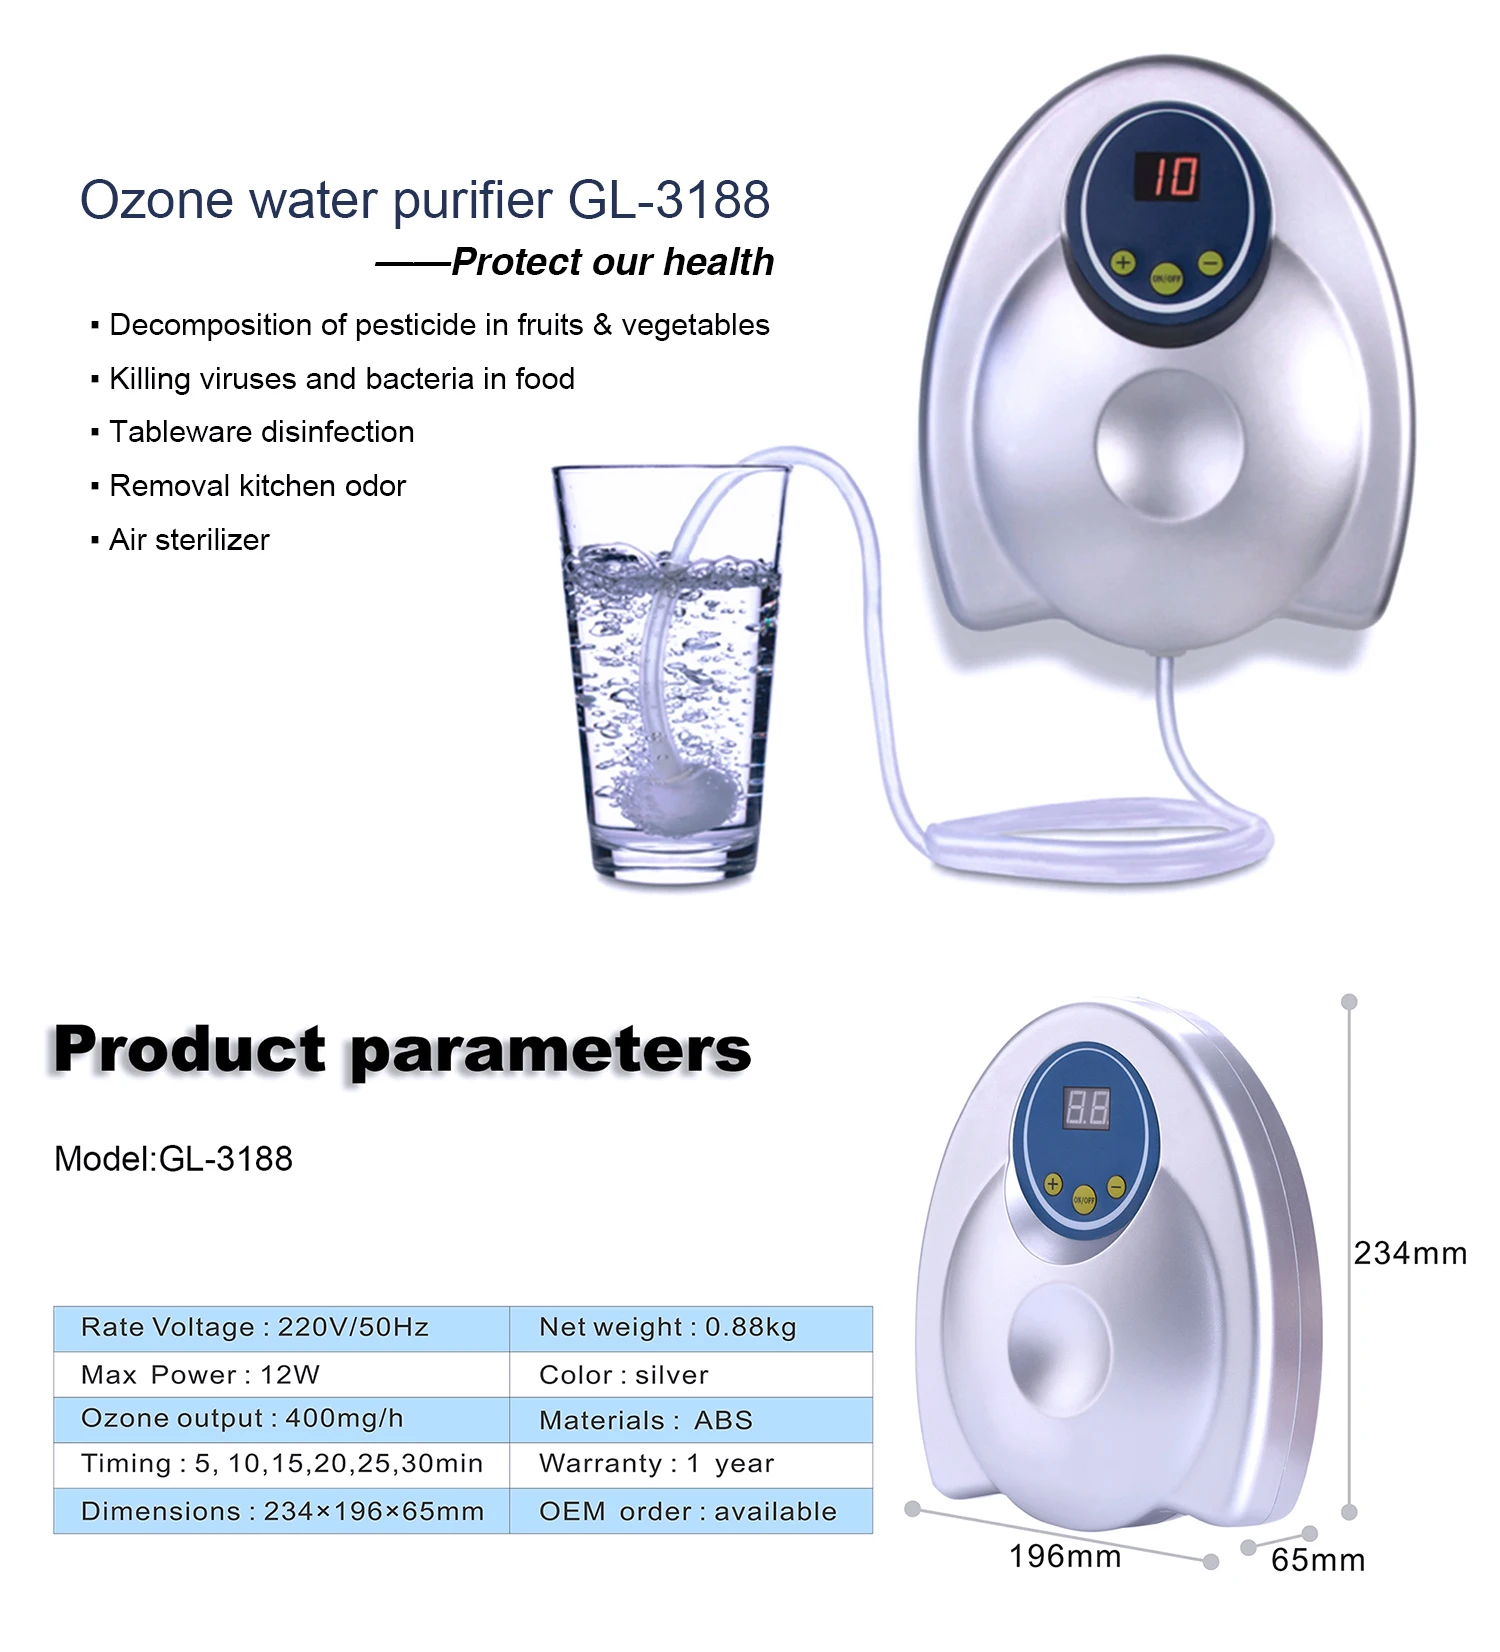 Ozone purifier